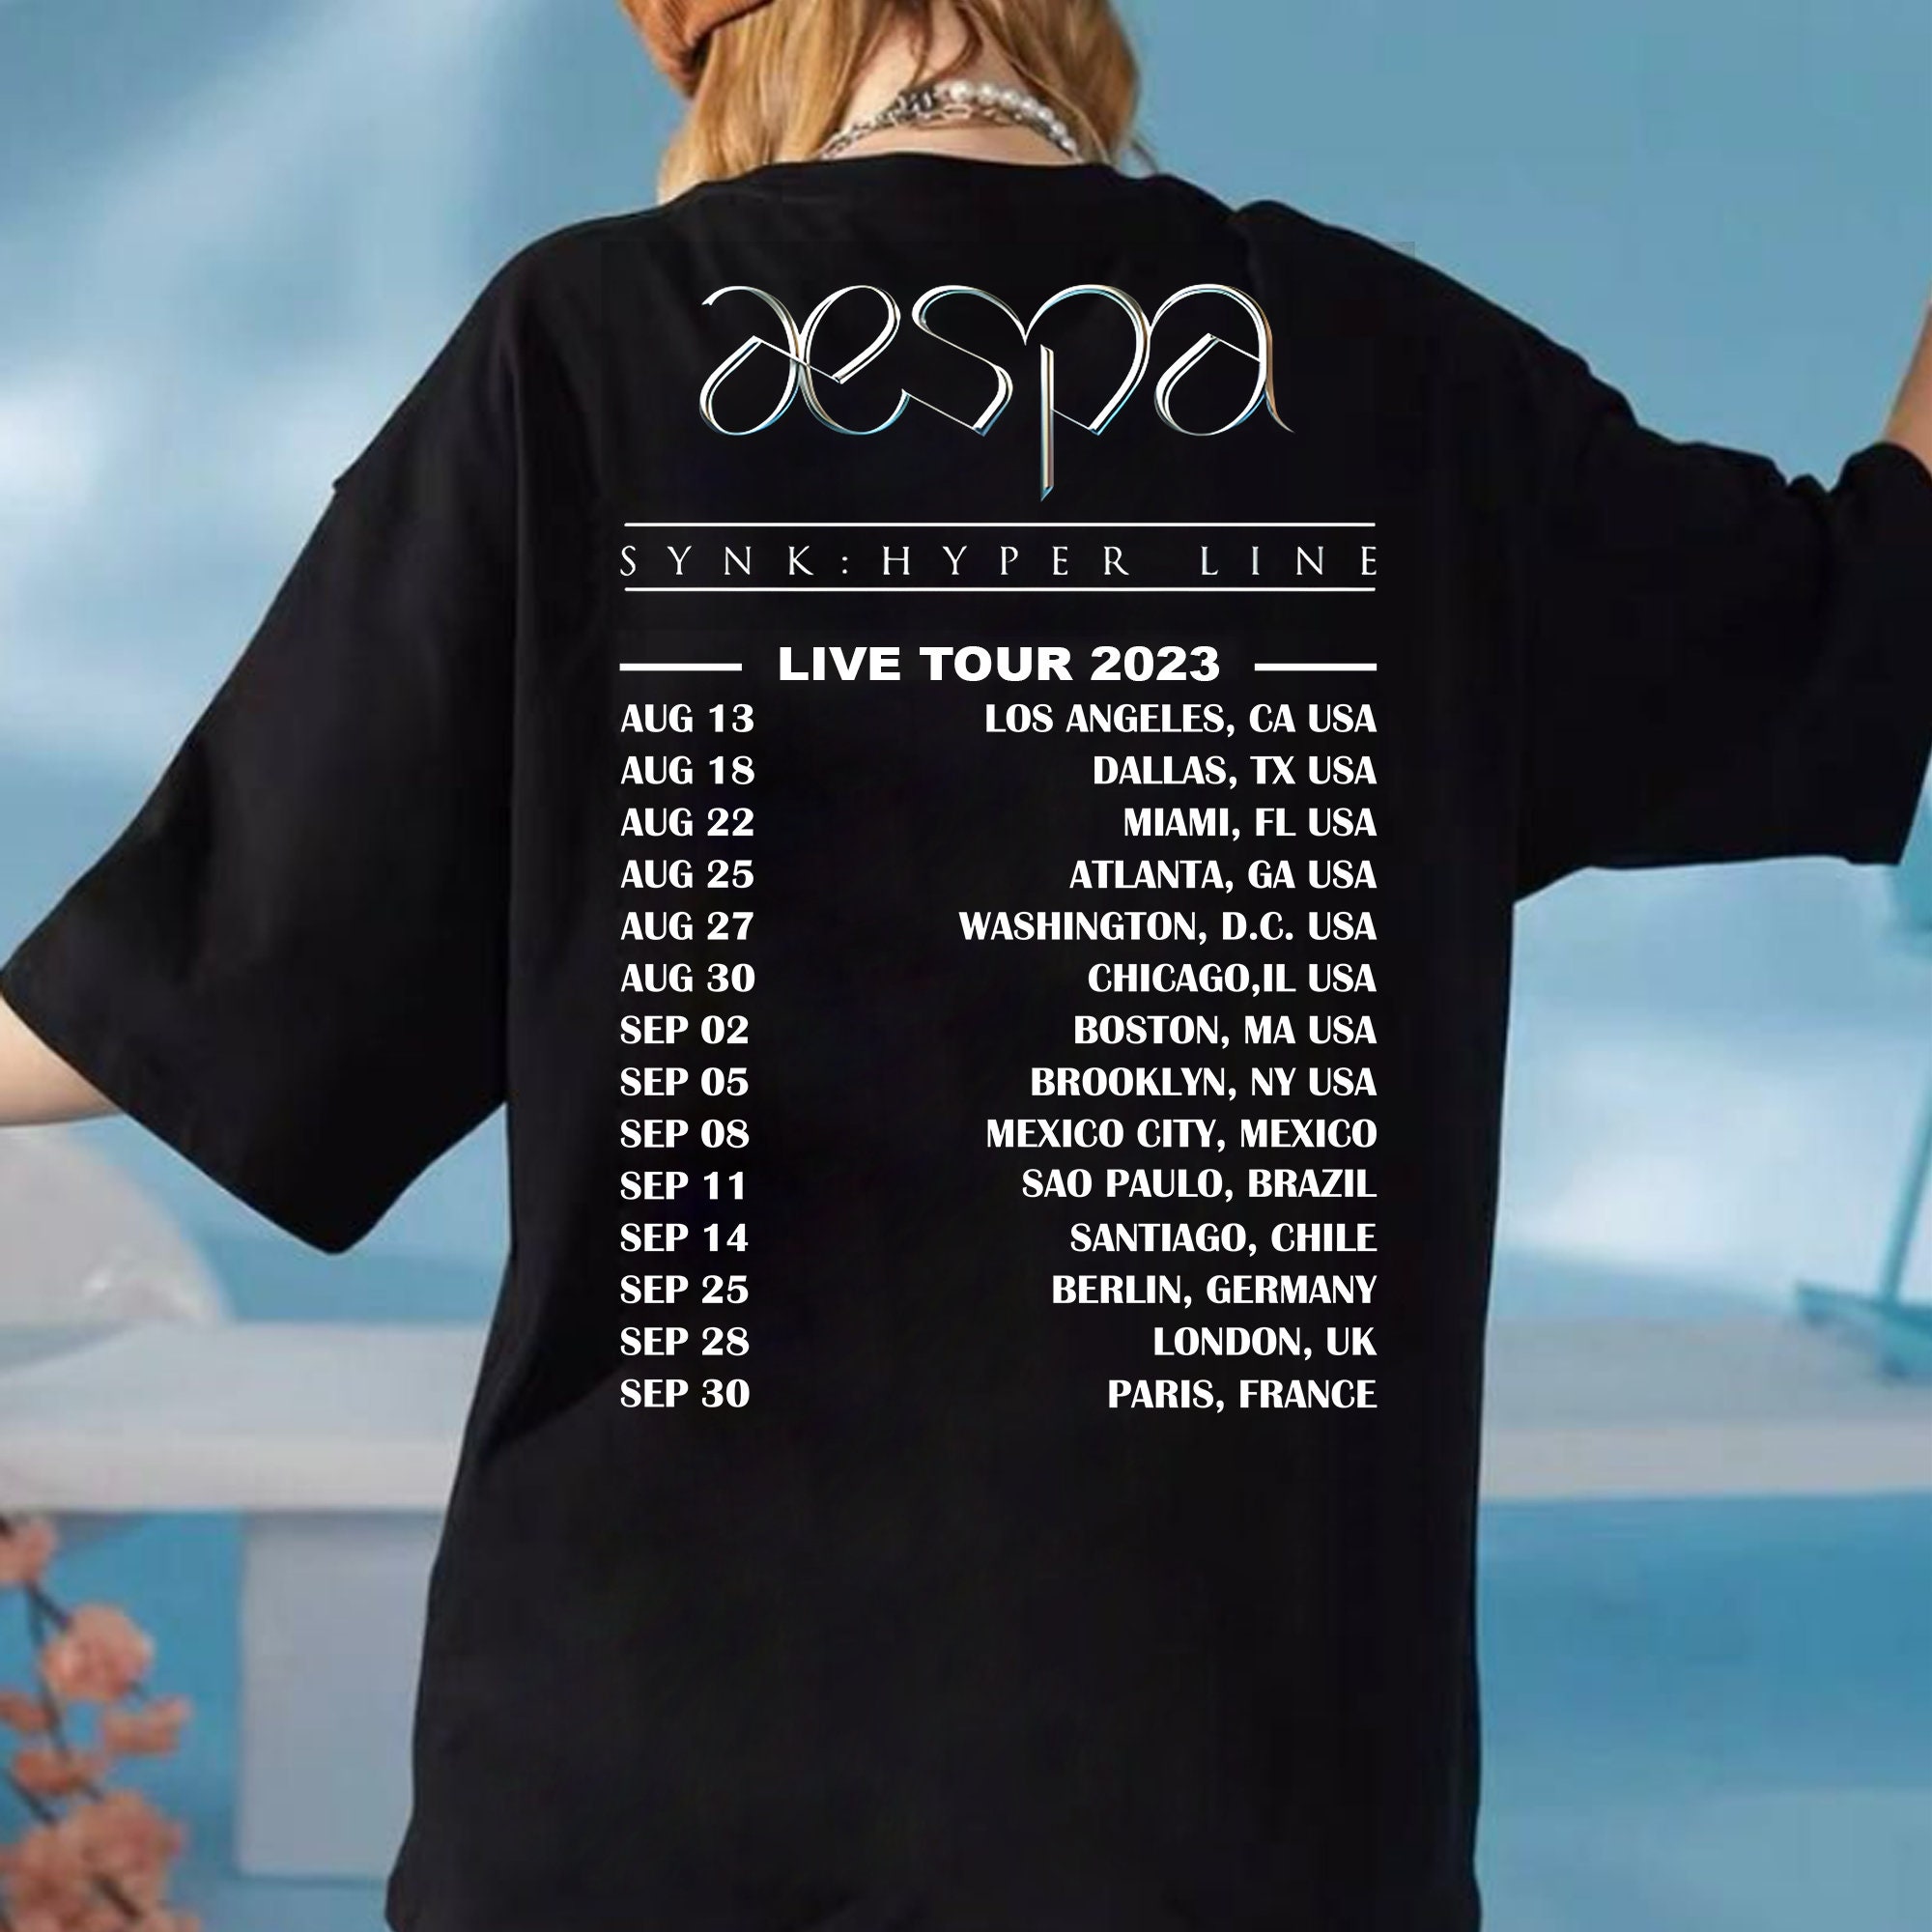 Aespa Tour 2023 T-Shirt, Aespa Synk Hyper Line Tour Shirt, Aespa ...